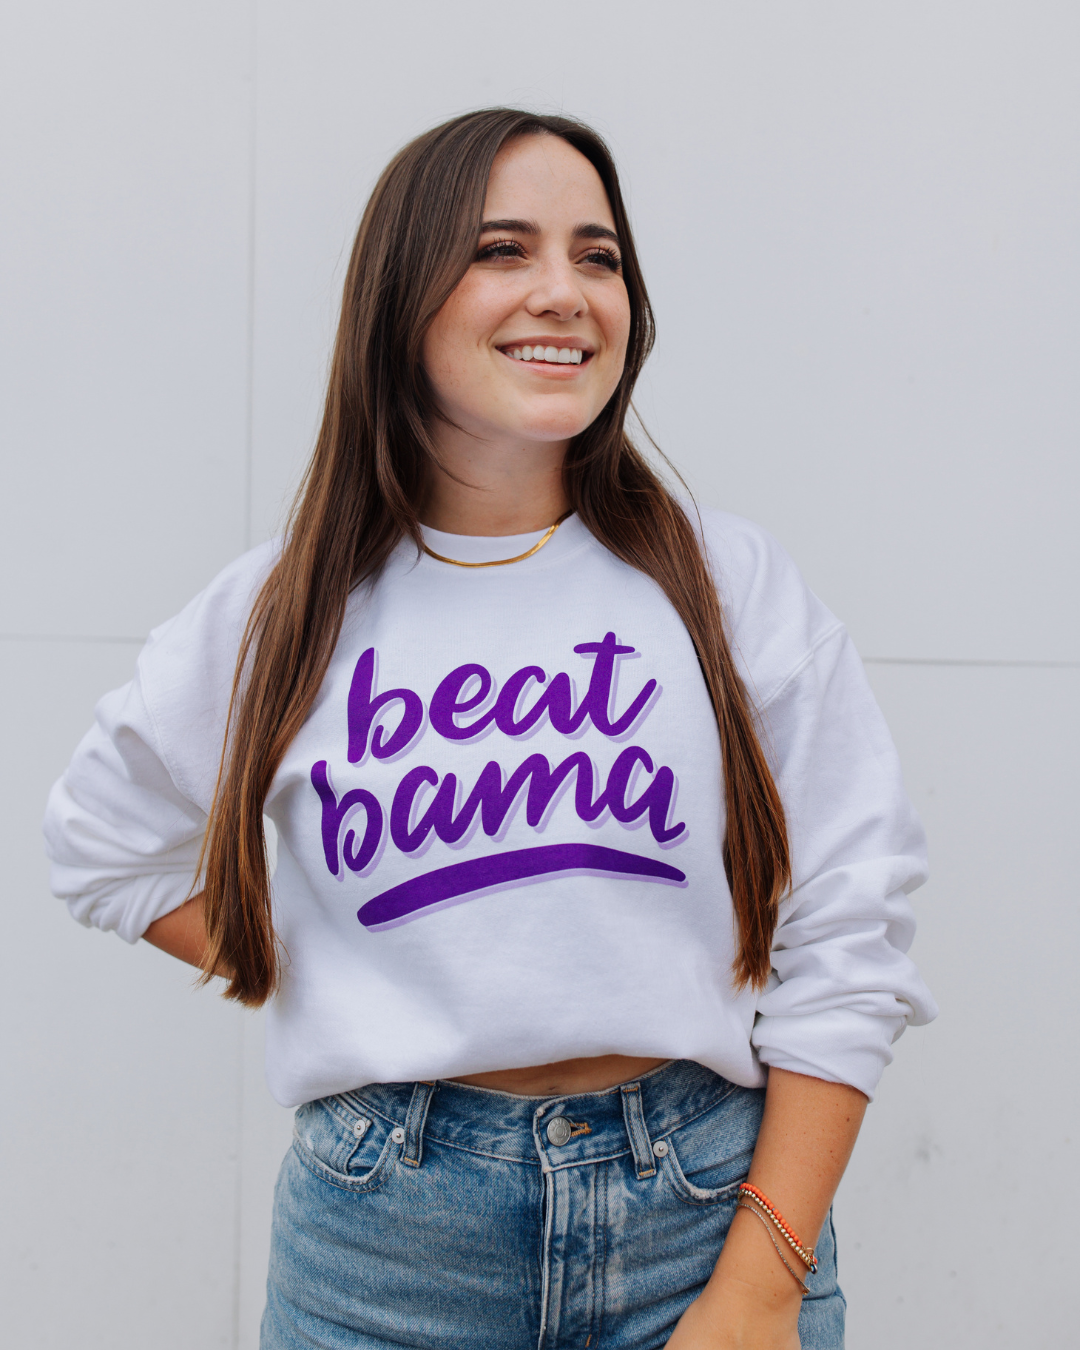 Beat Bama Vintage Sweatshirt